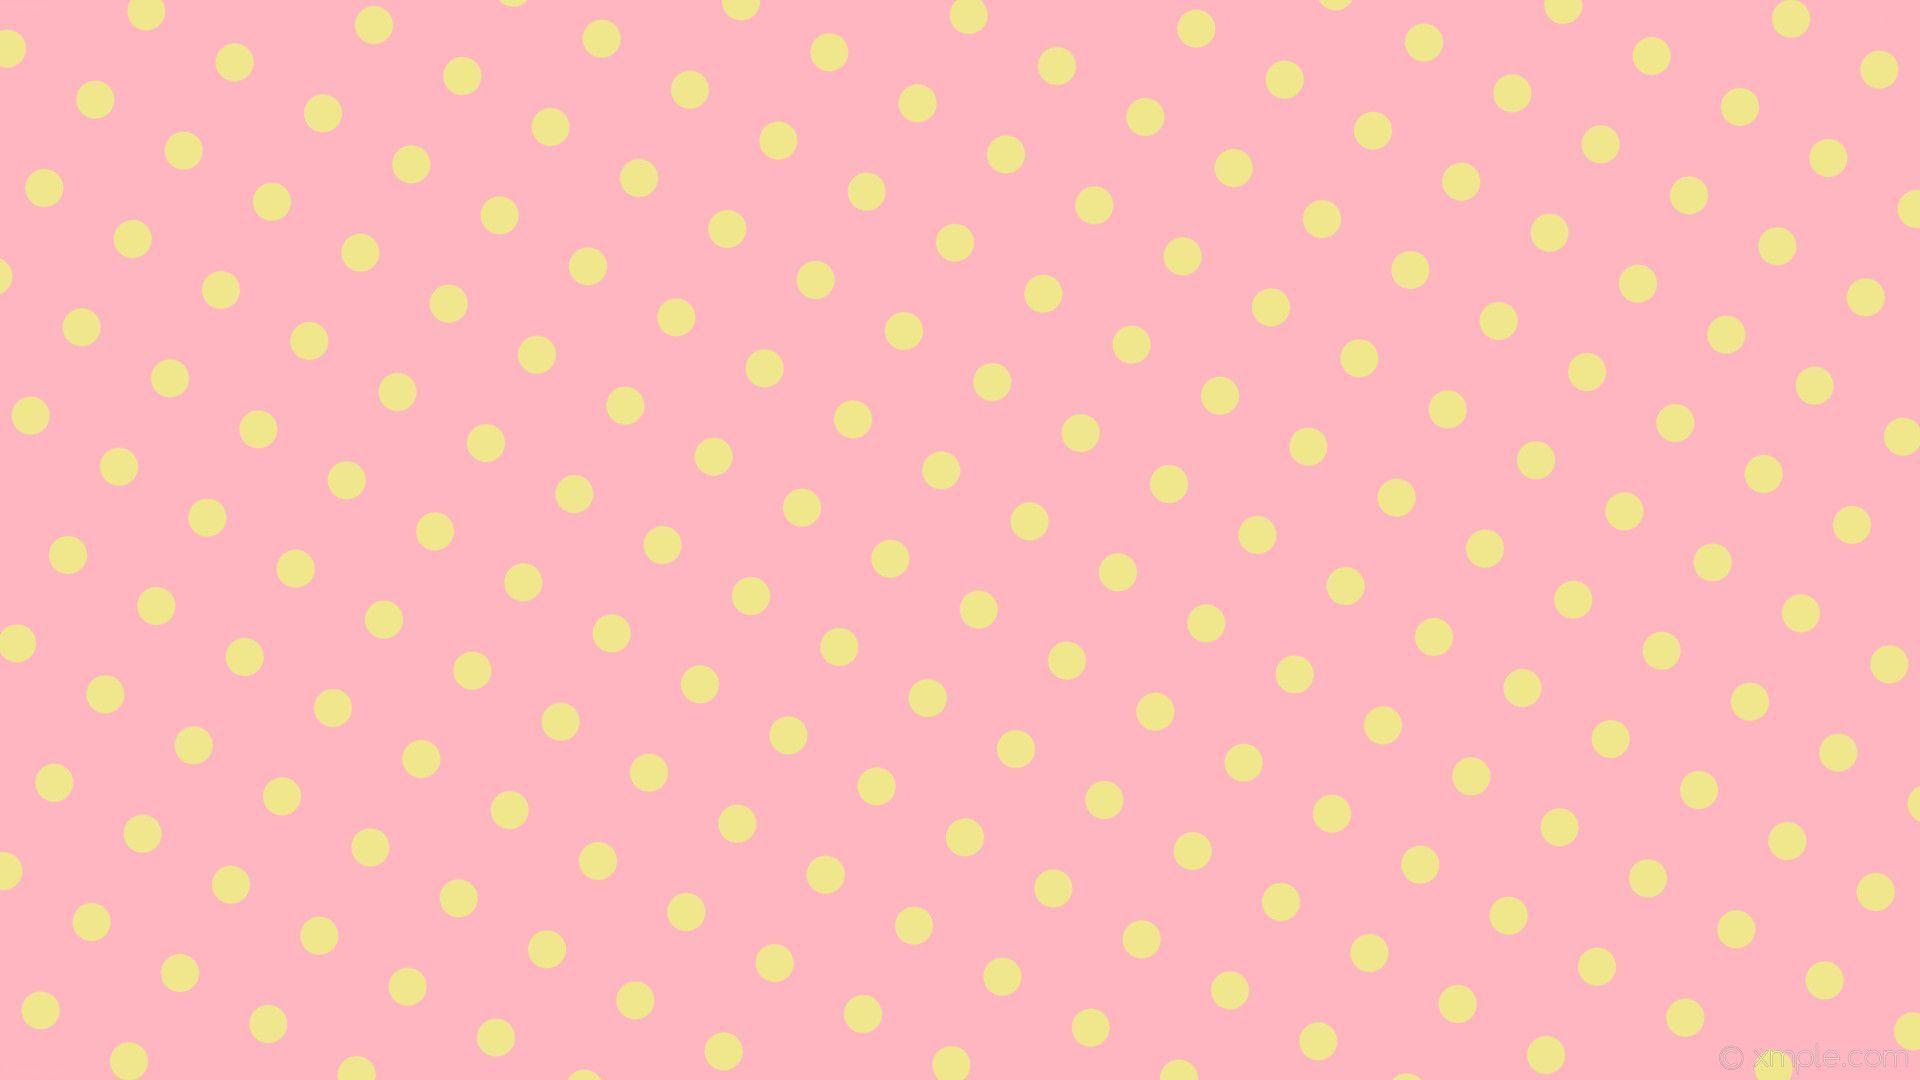 Pink Polka Dot Wallpaper. Gallery Of Pink Polka Dot Wallpaper